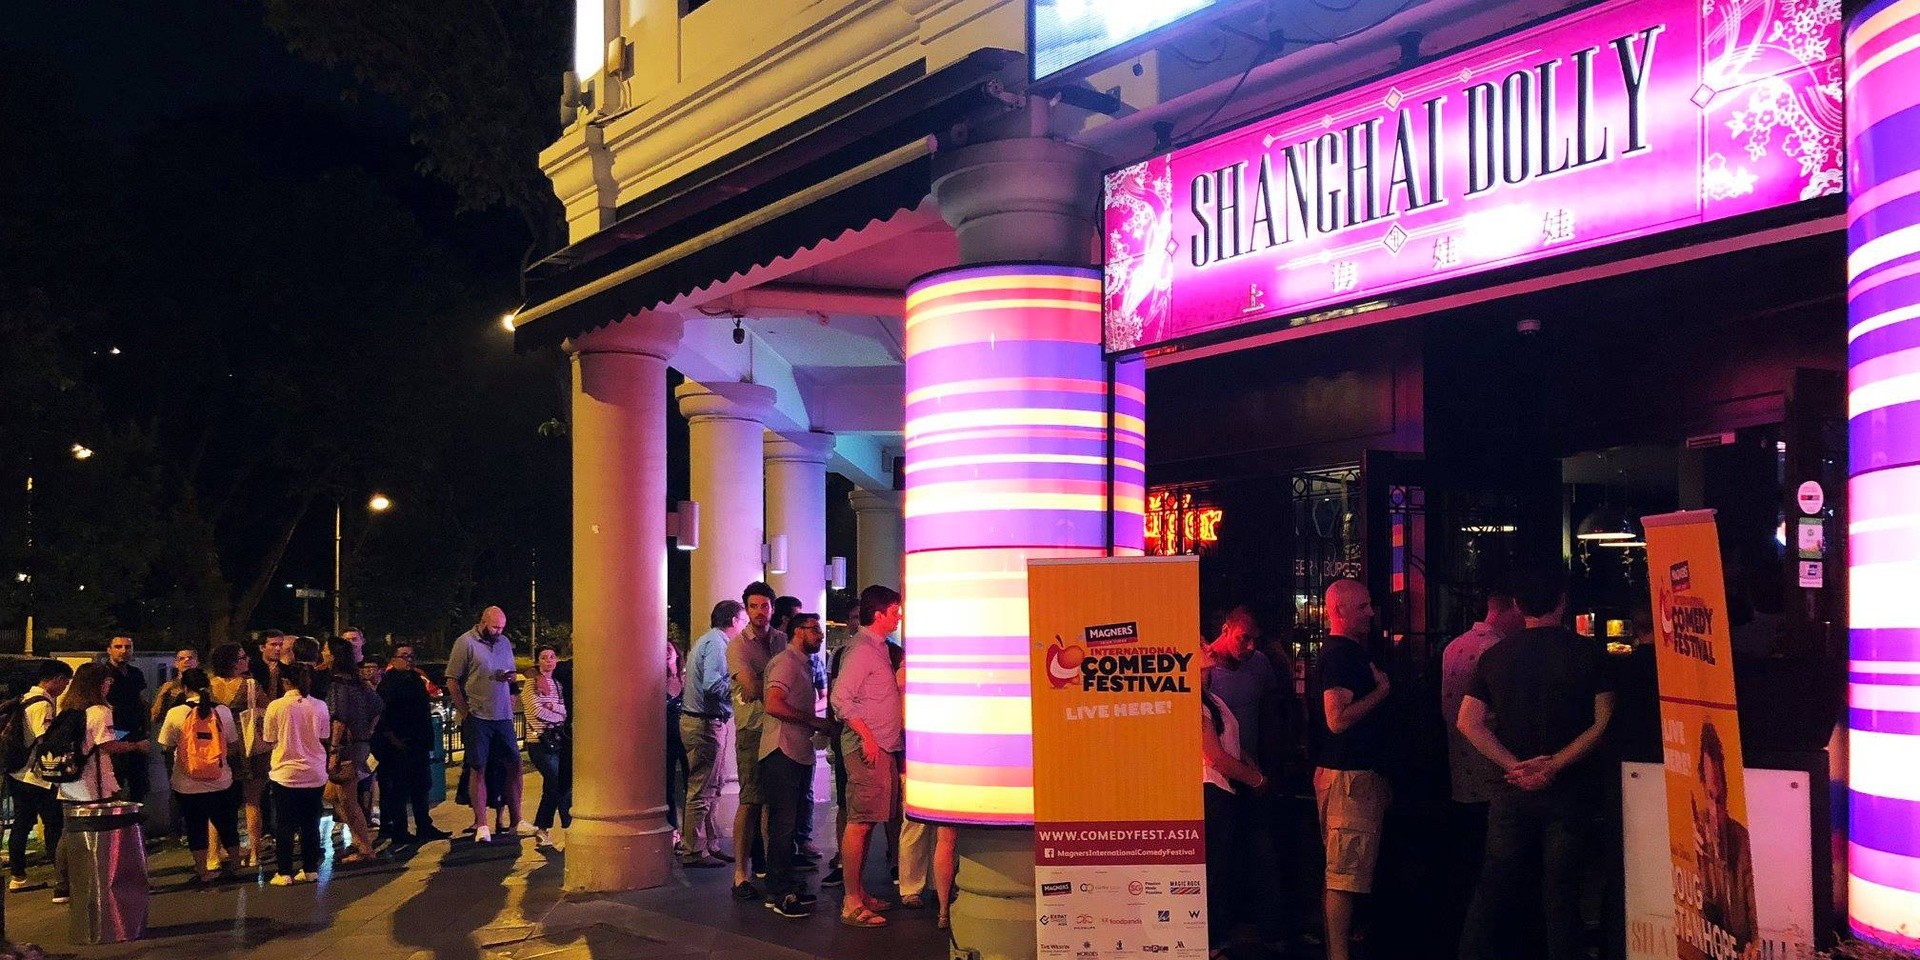 Mandopop in Singapore loses a venue in Shanghai Dolly